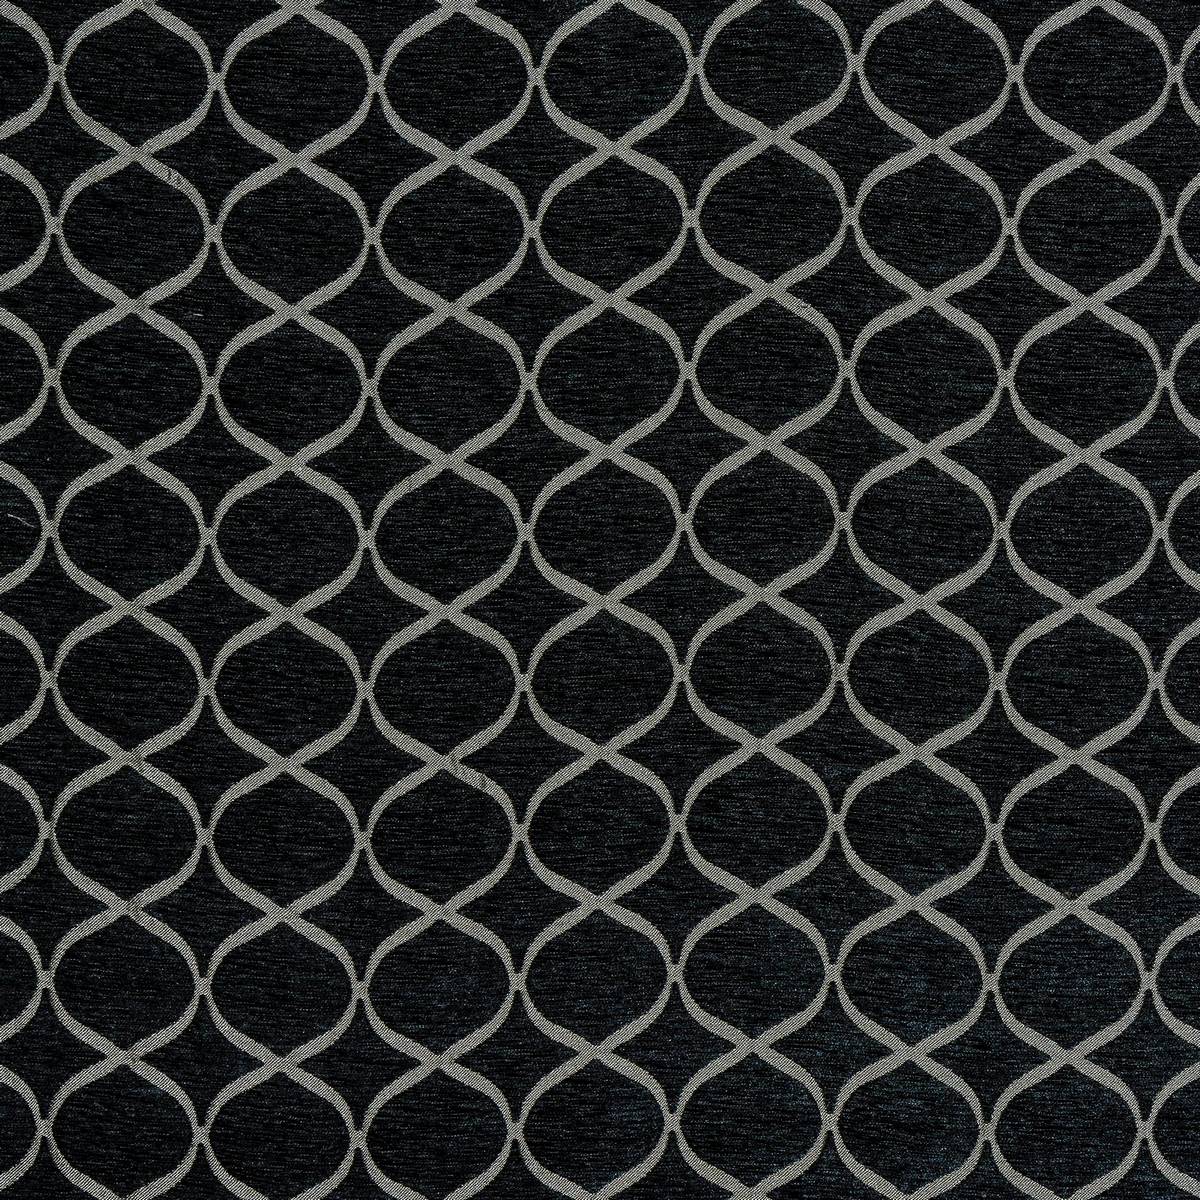 Trellis Charcoal Fabric by Fryetts